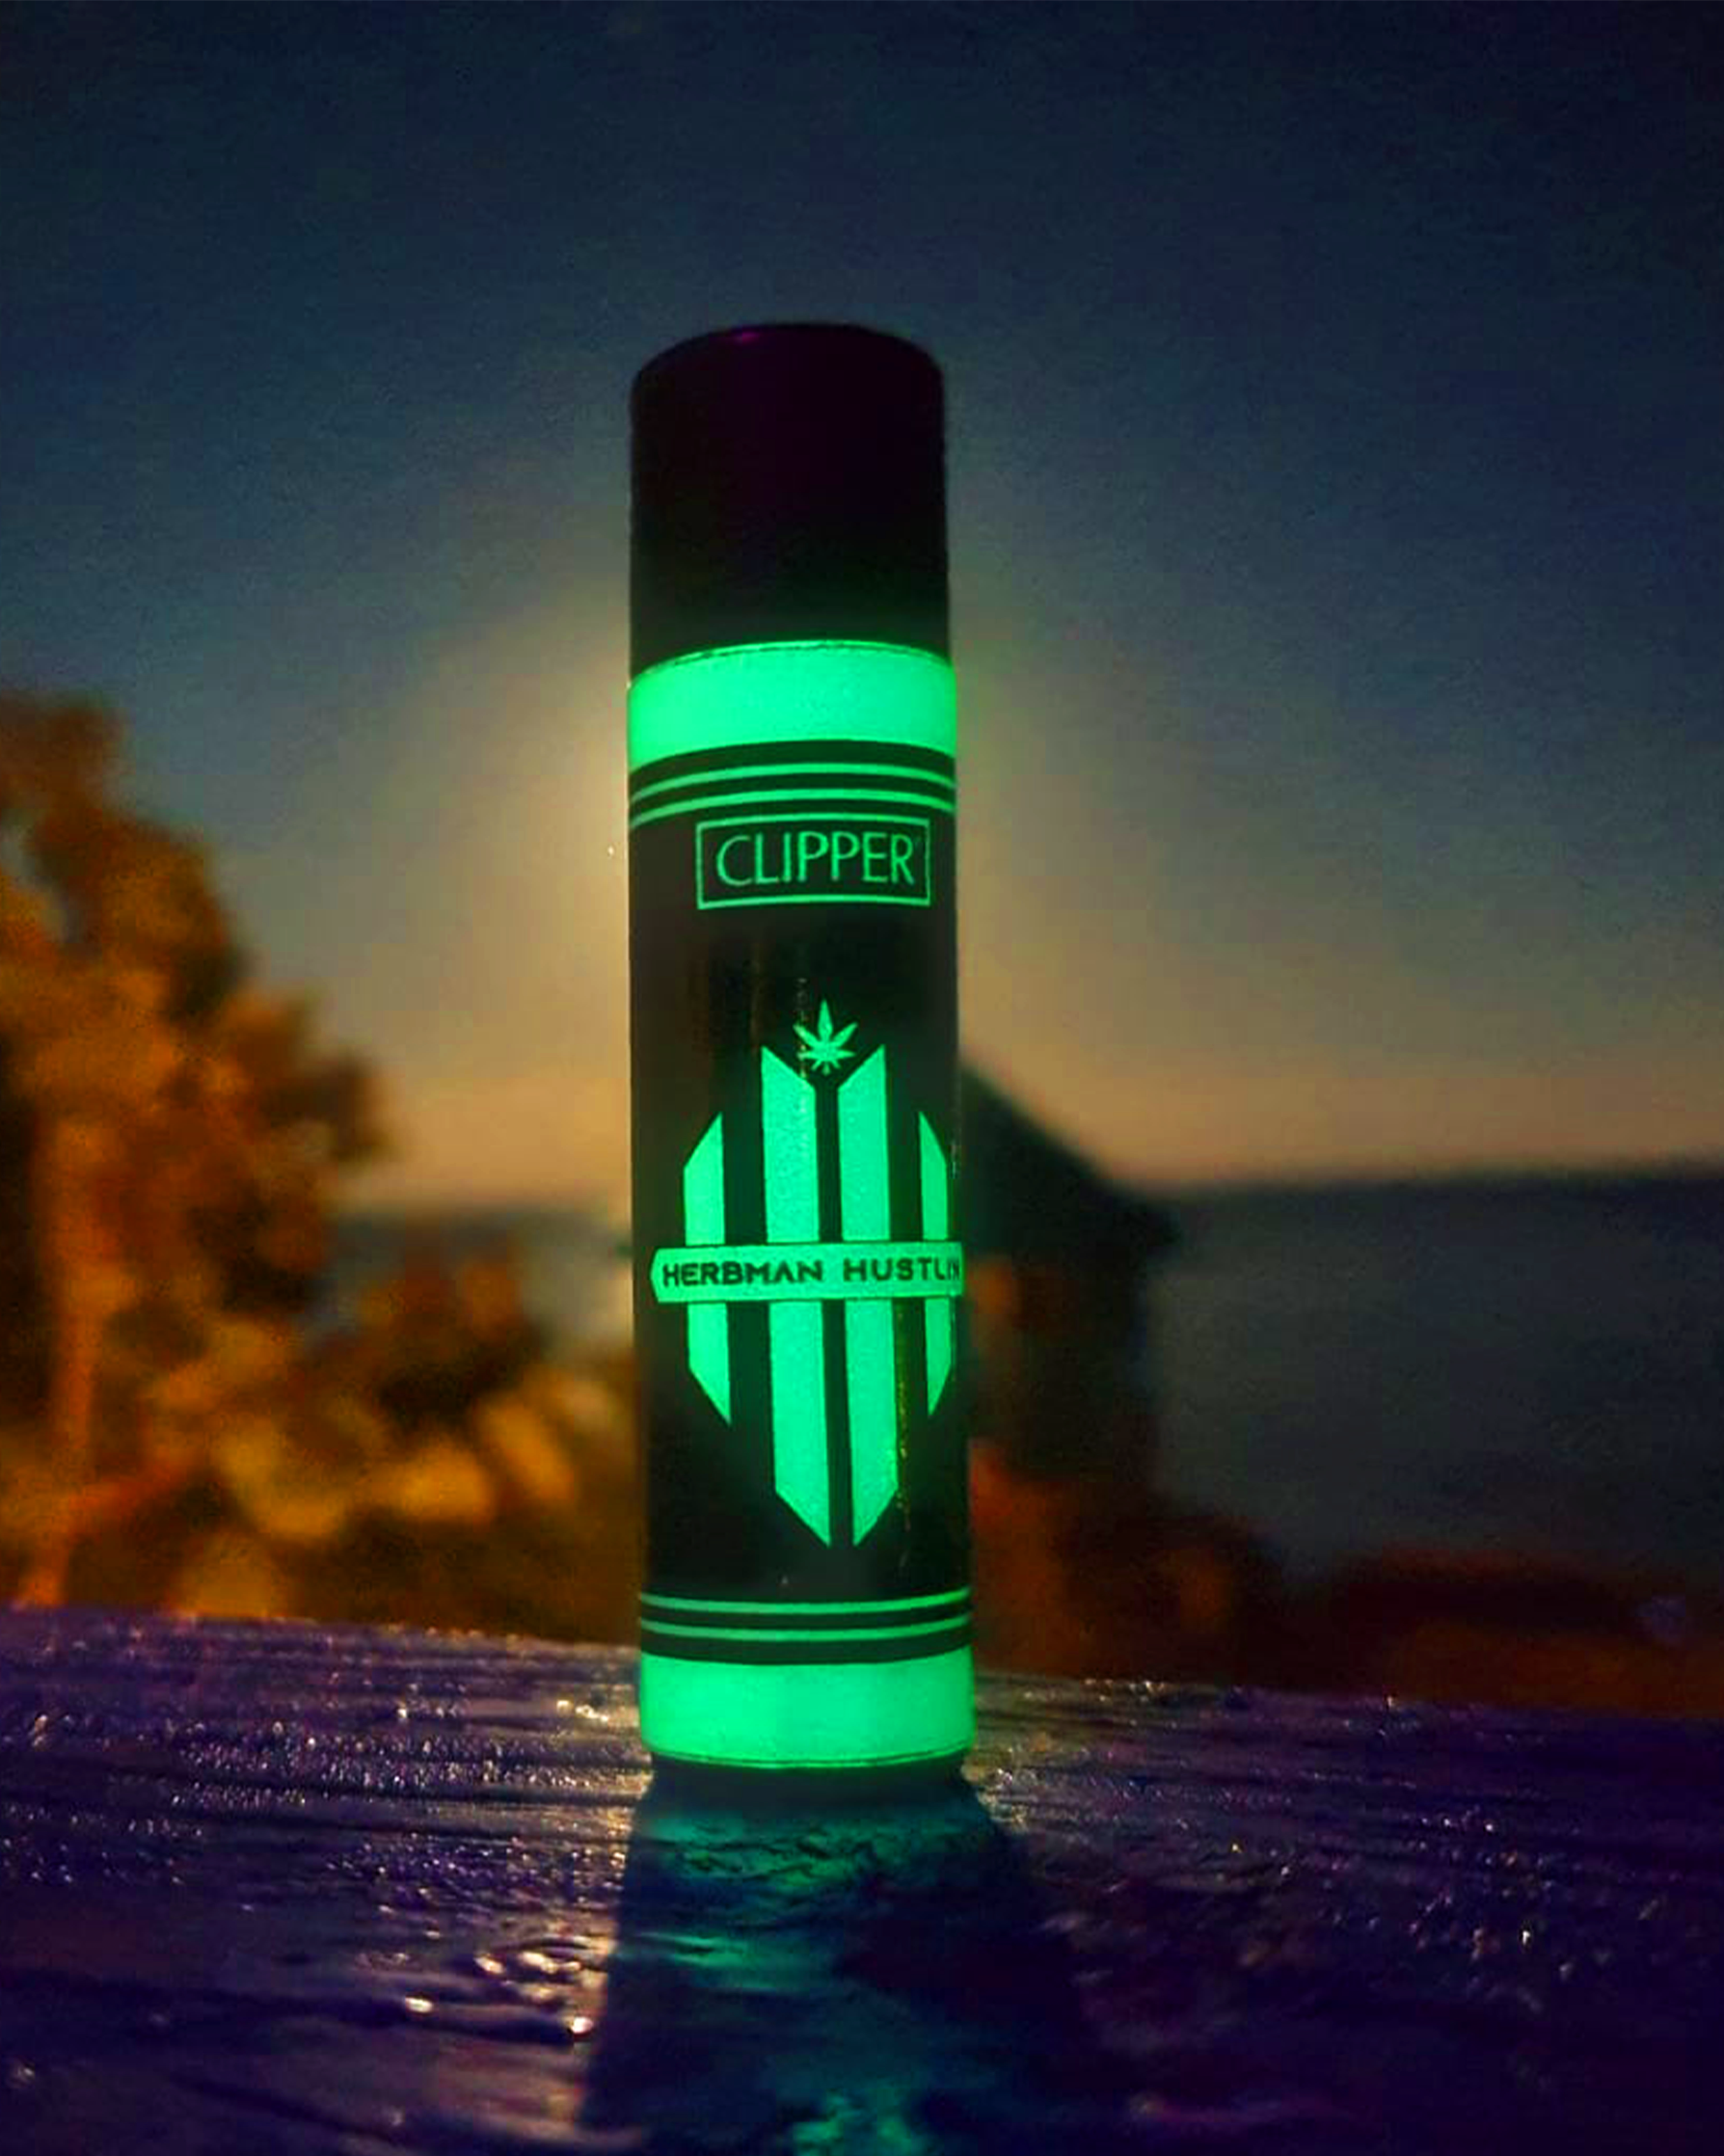 Herbman Hustlin Clipper Lighter - Glow In the Dark